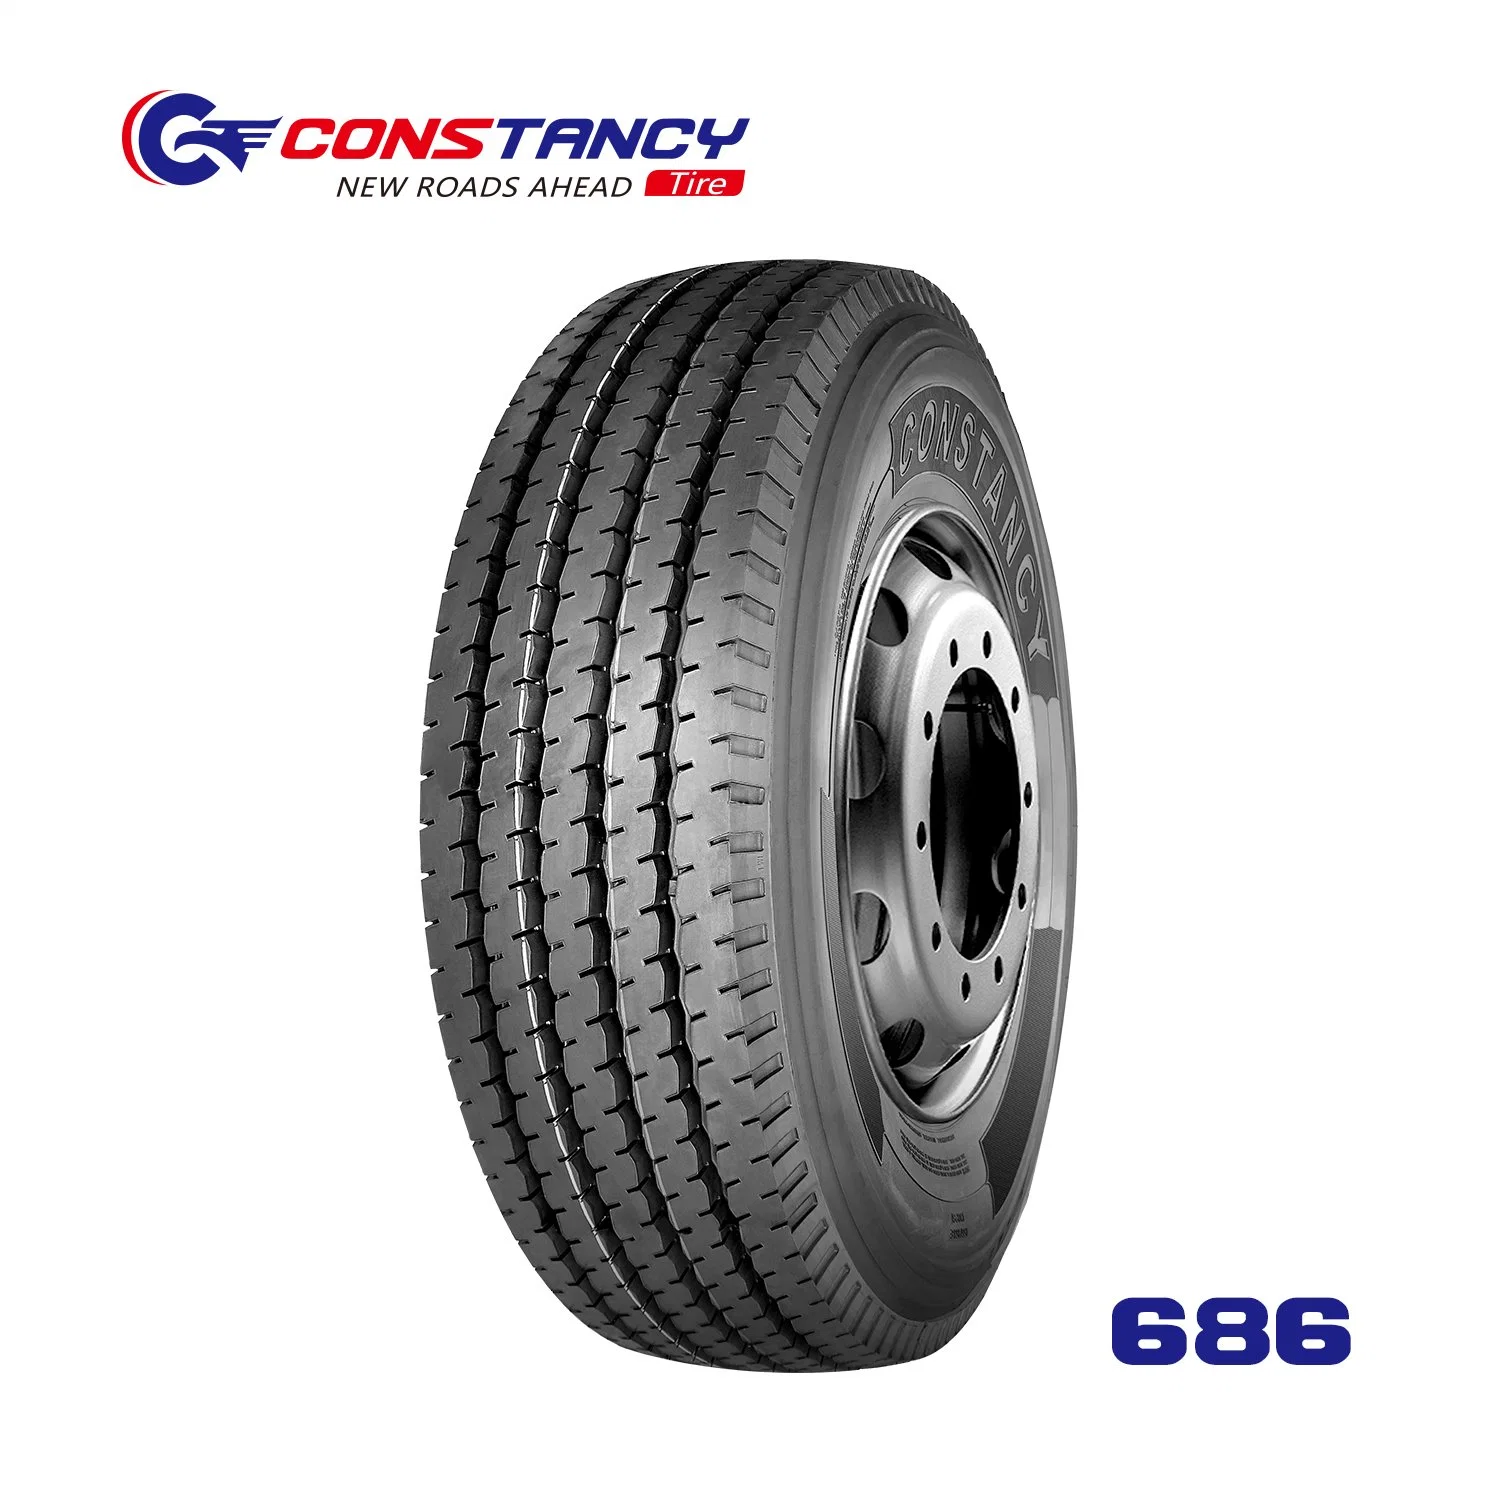 Constancy 686 Radial Truck Bus Tyre (11.00R20)